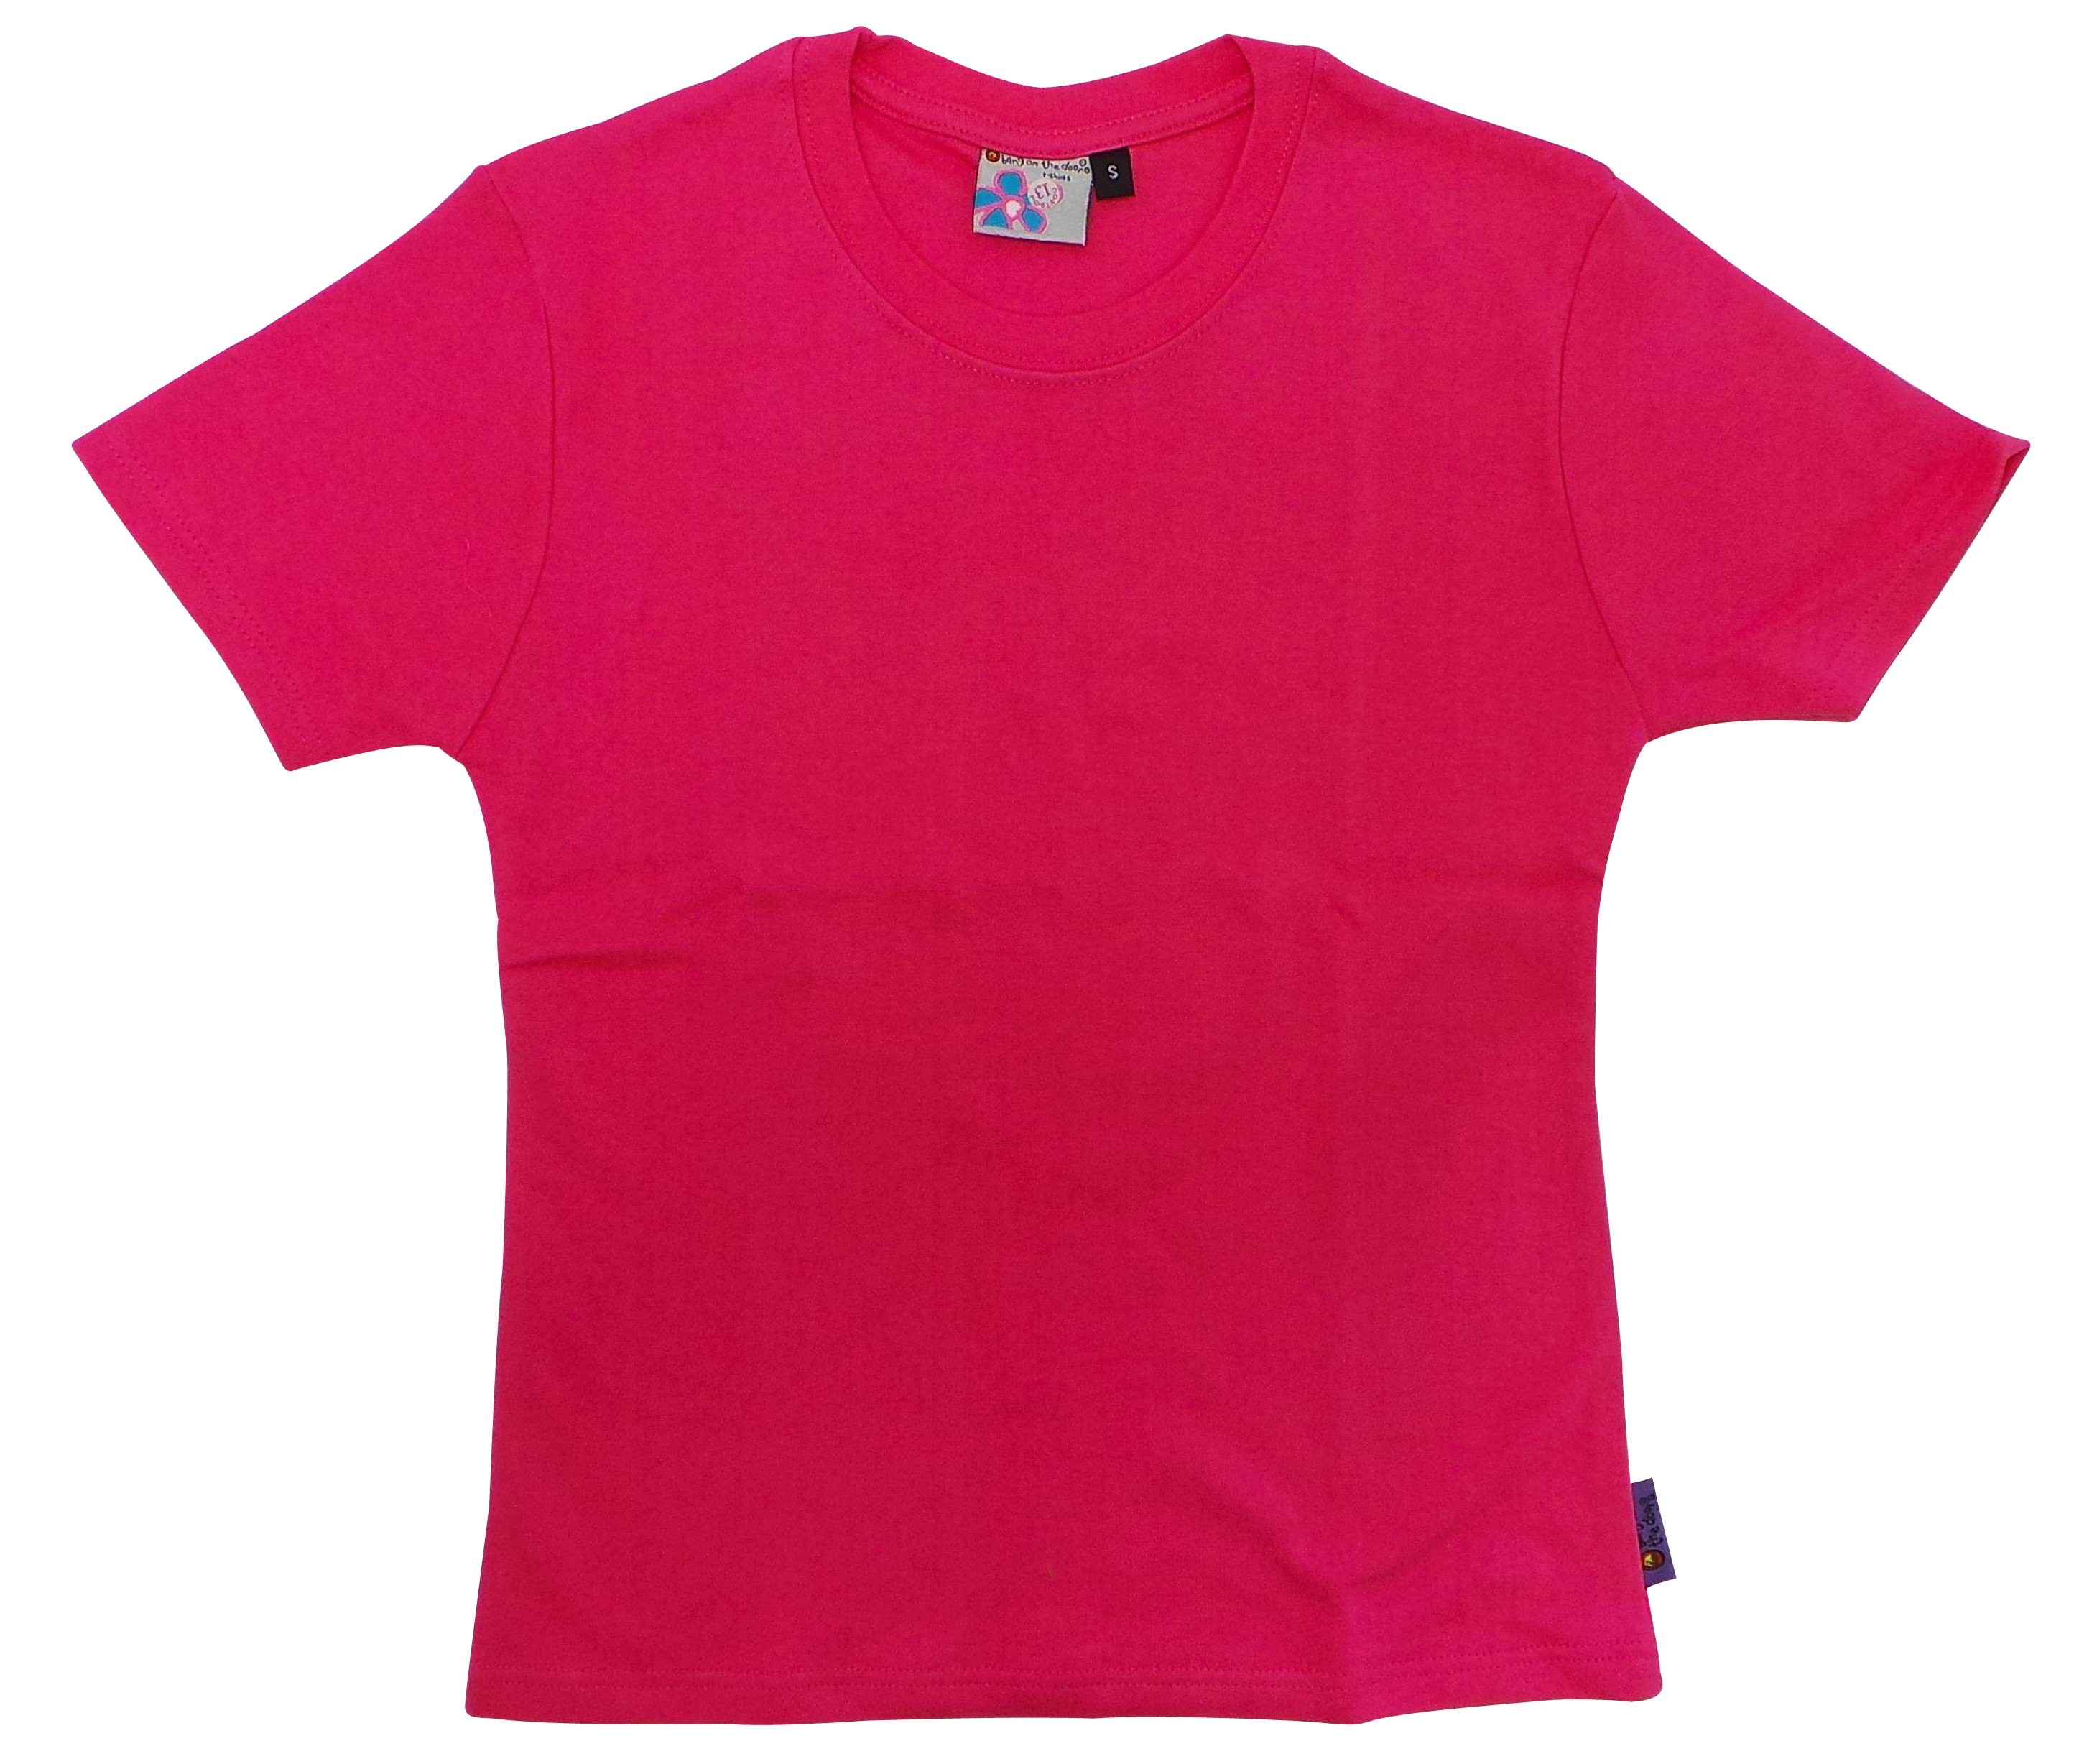 Joblot of 10 Girls/Teenagers Plain Fuschia T-Shirts Size Small